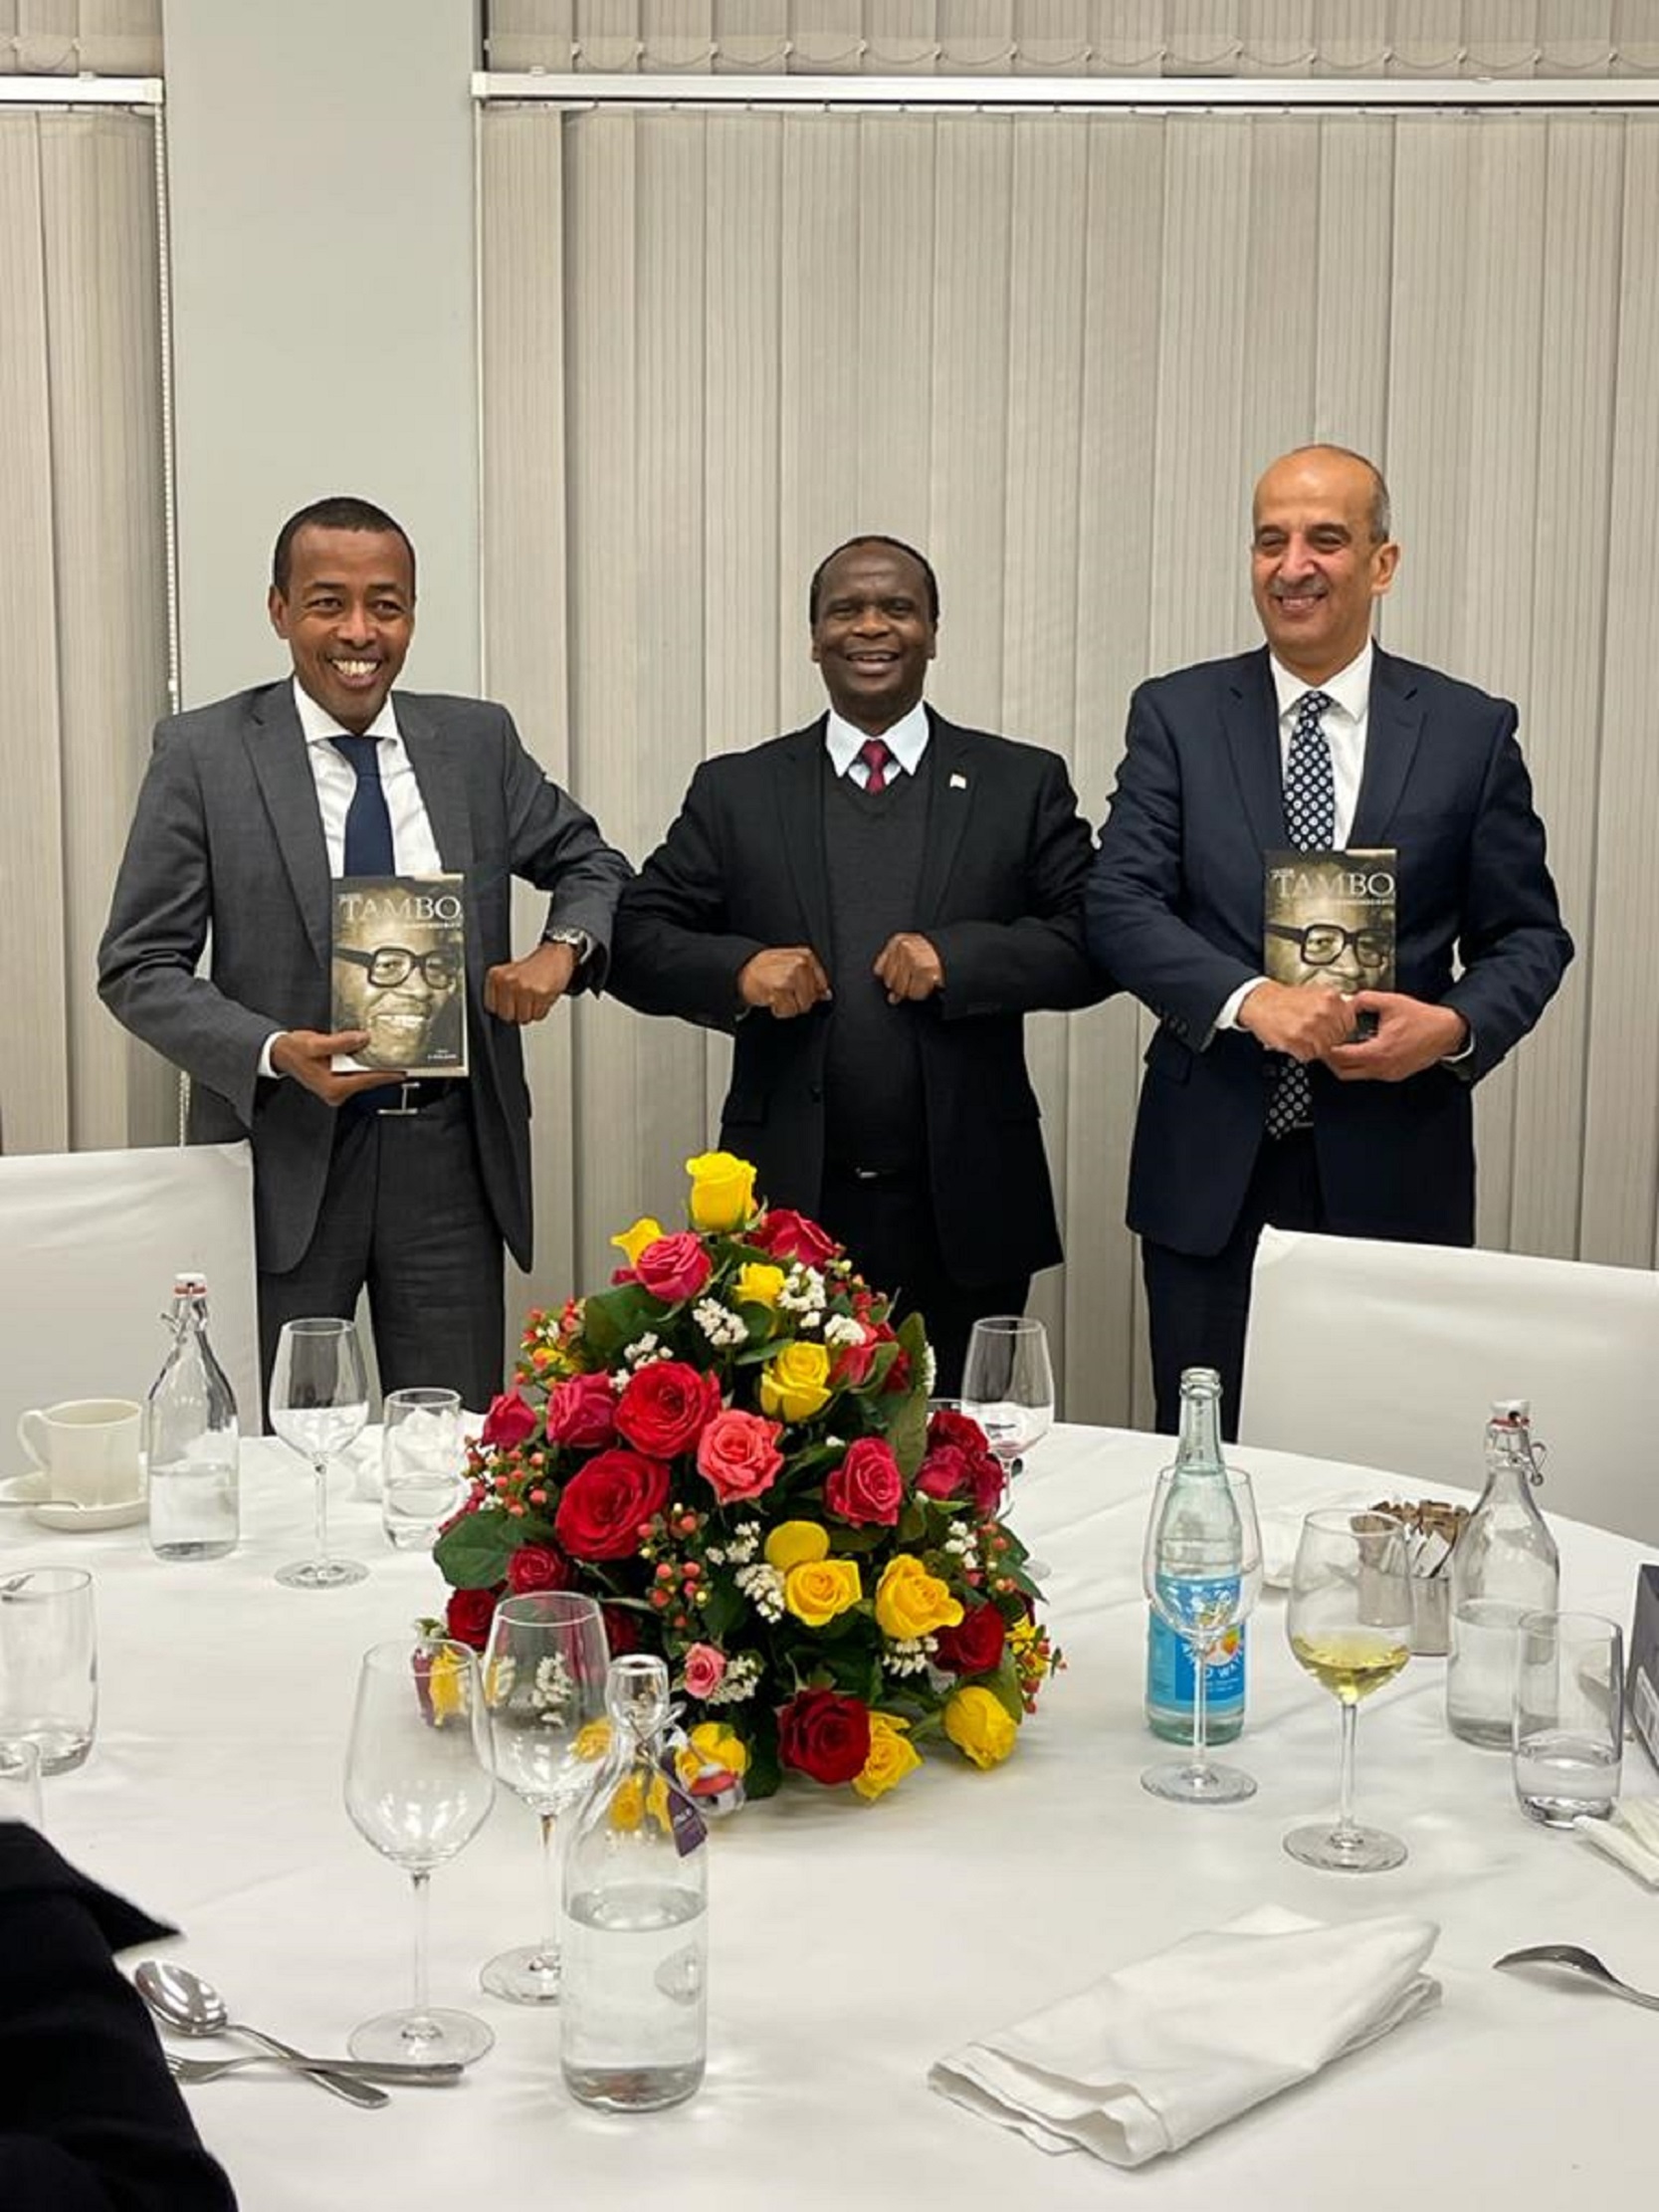 On 12 July 2021, H.E. Ambassador Edward Xolisa Makaya, hosted a reception to bid farewell to H.E. Ambassador Mohamed Idriss Farah of Djibouti and H.E. Ambassador Osama Abdel Khalek of Egypt.